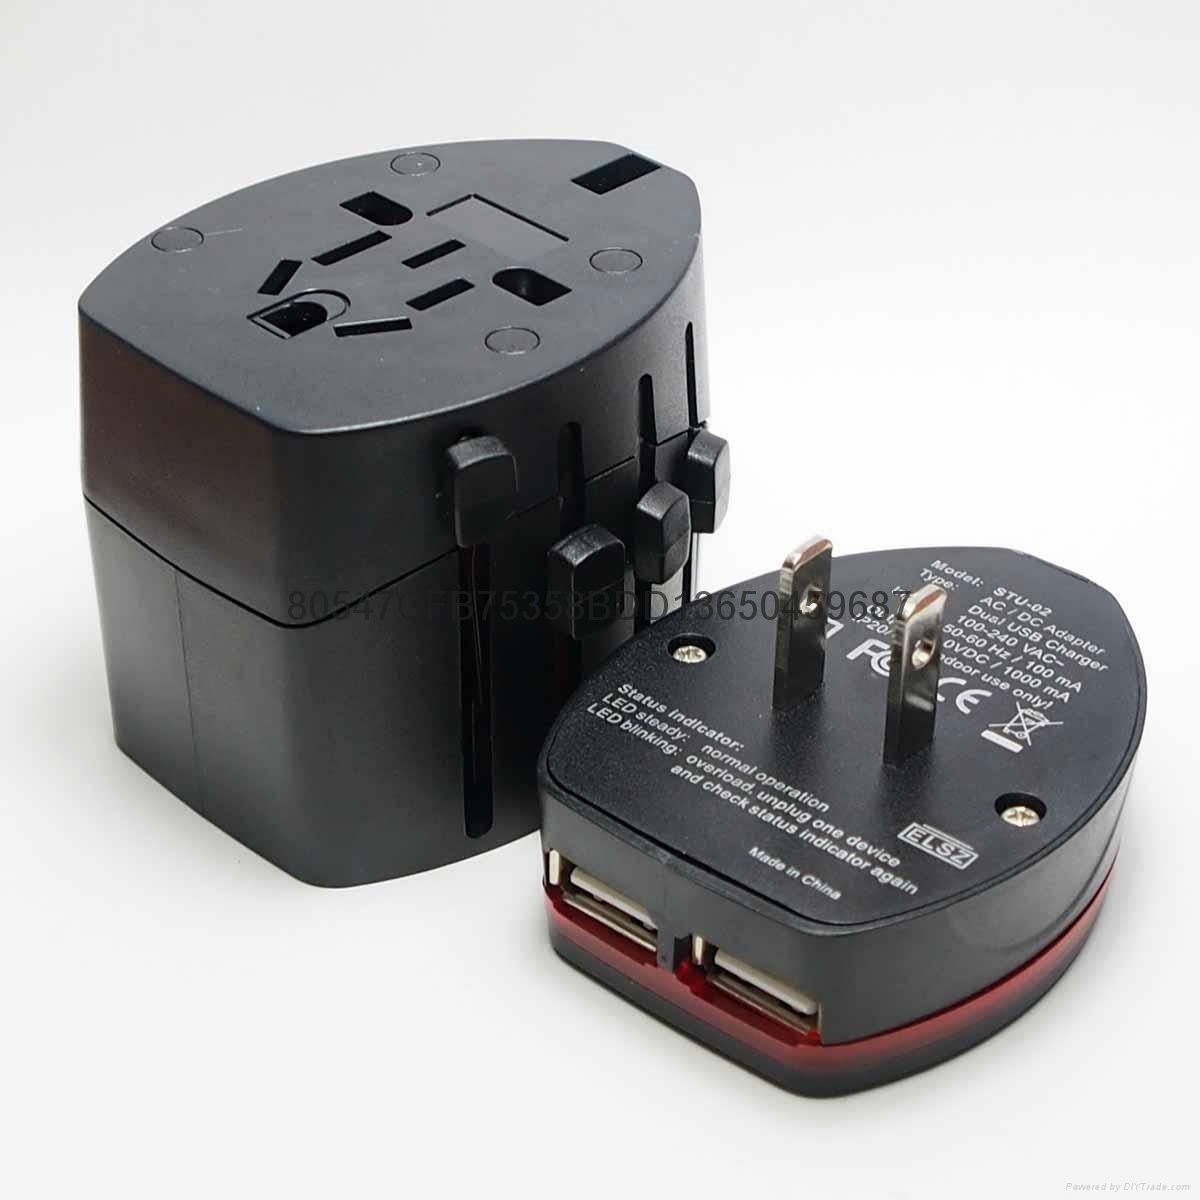 SWA2U 双USB转换插座 全球通用转换插座 万能转换器 2